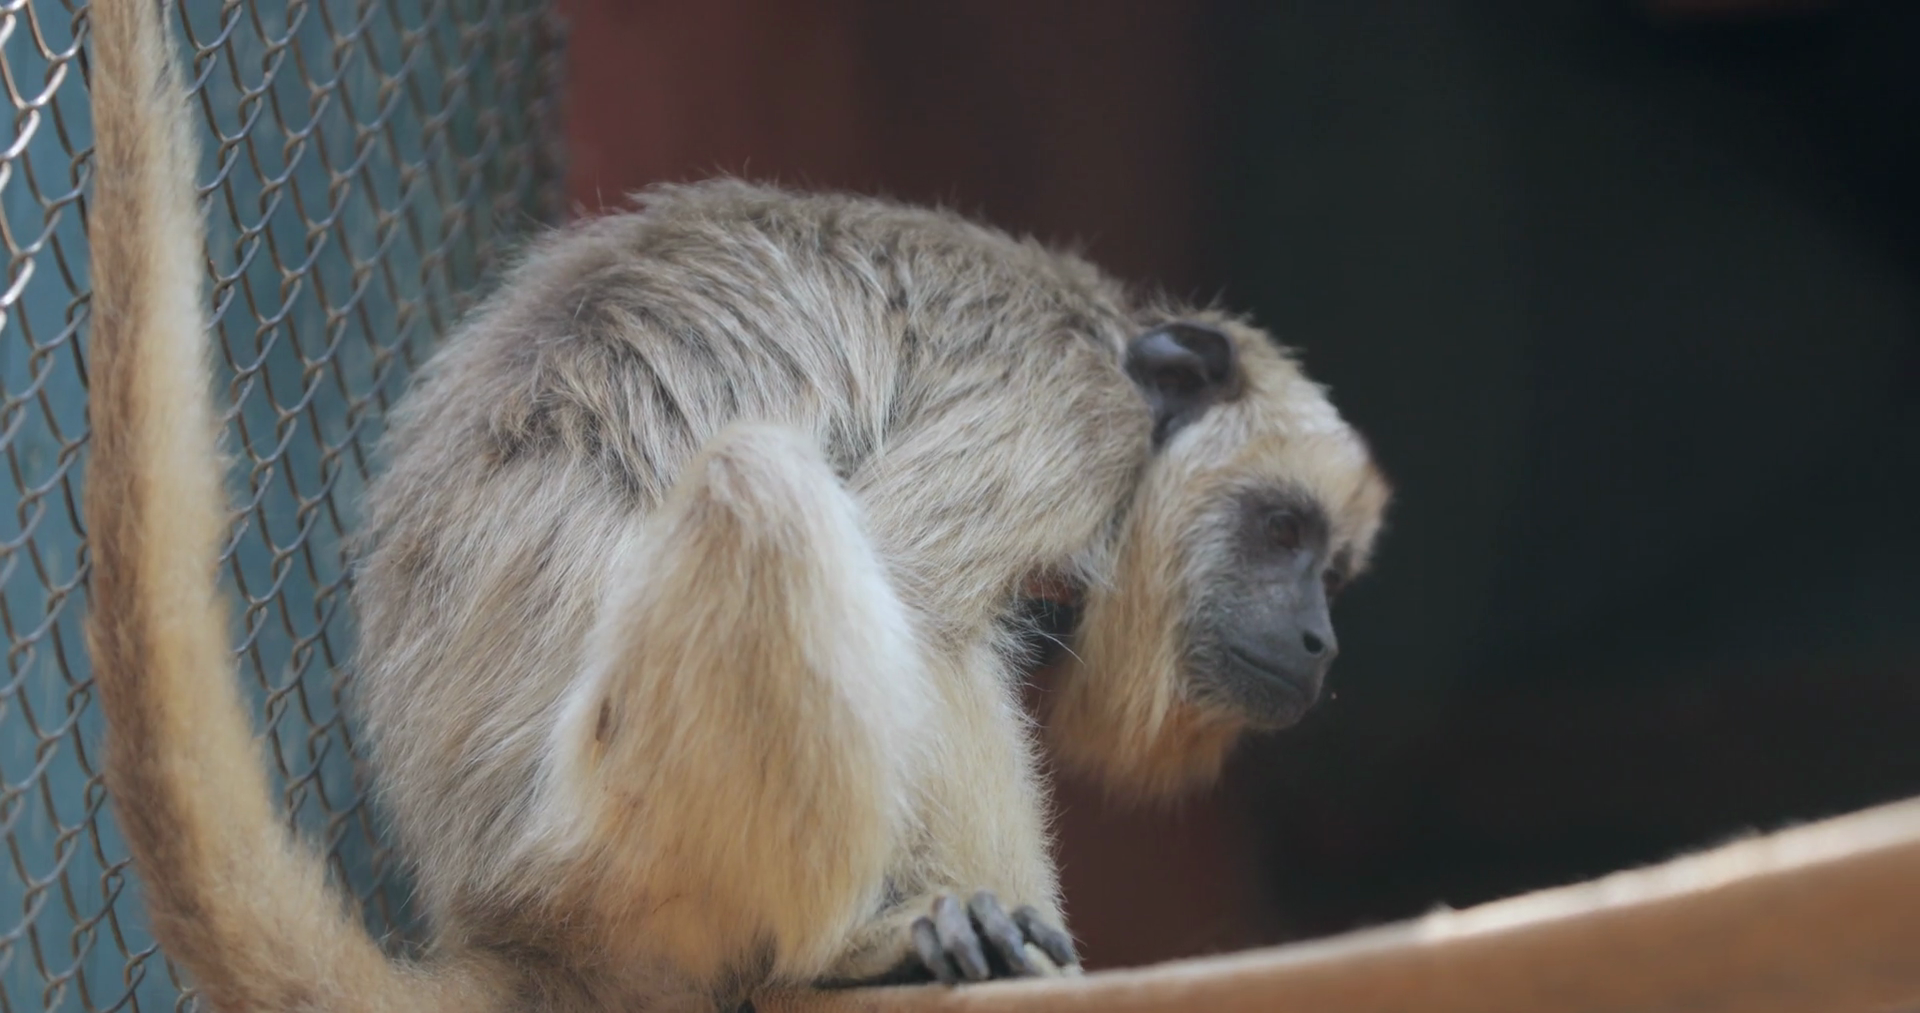 Sad Looking Monkey Locked Behind Bars Inside Cage Stock Video ...